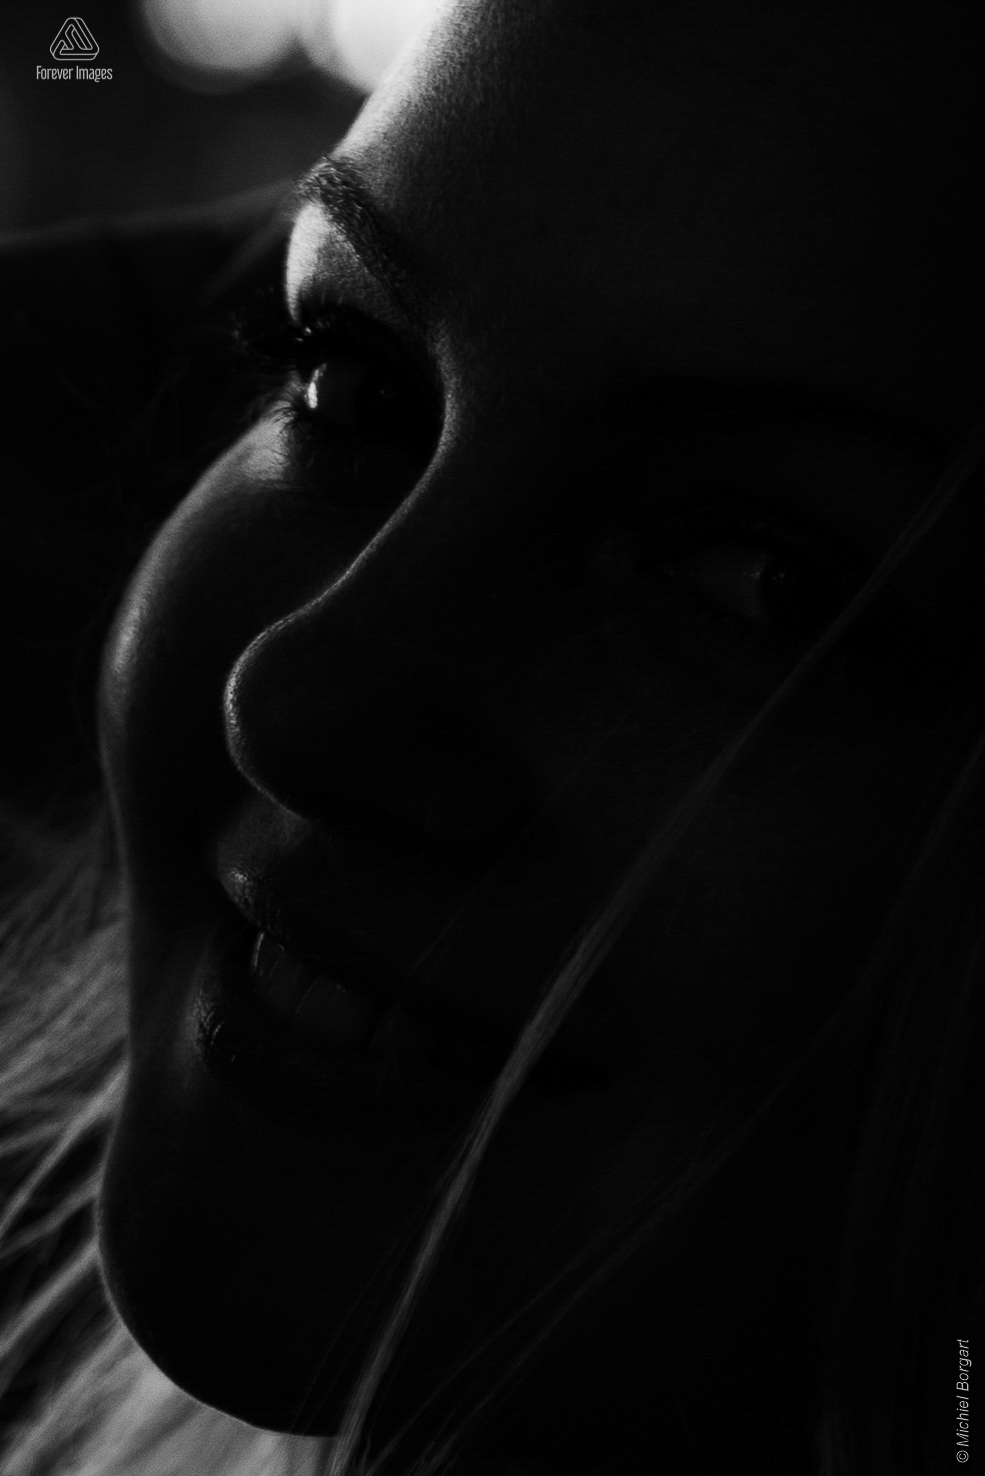 Portretfoto zwart-wit low key jonge dame close up | Porscha Luna de Jong Happyhappyjoyjoy | Portretfotograaf Michiel Borgart - Forever Images.